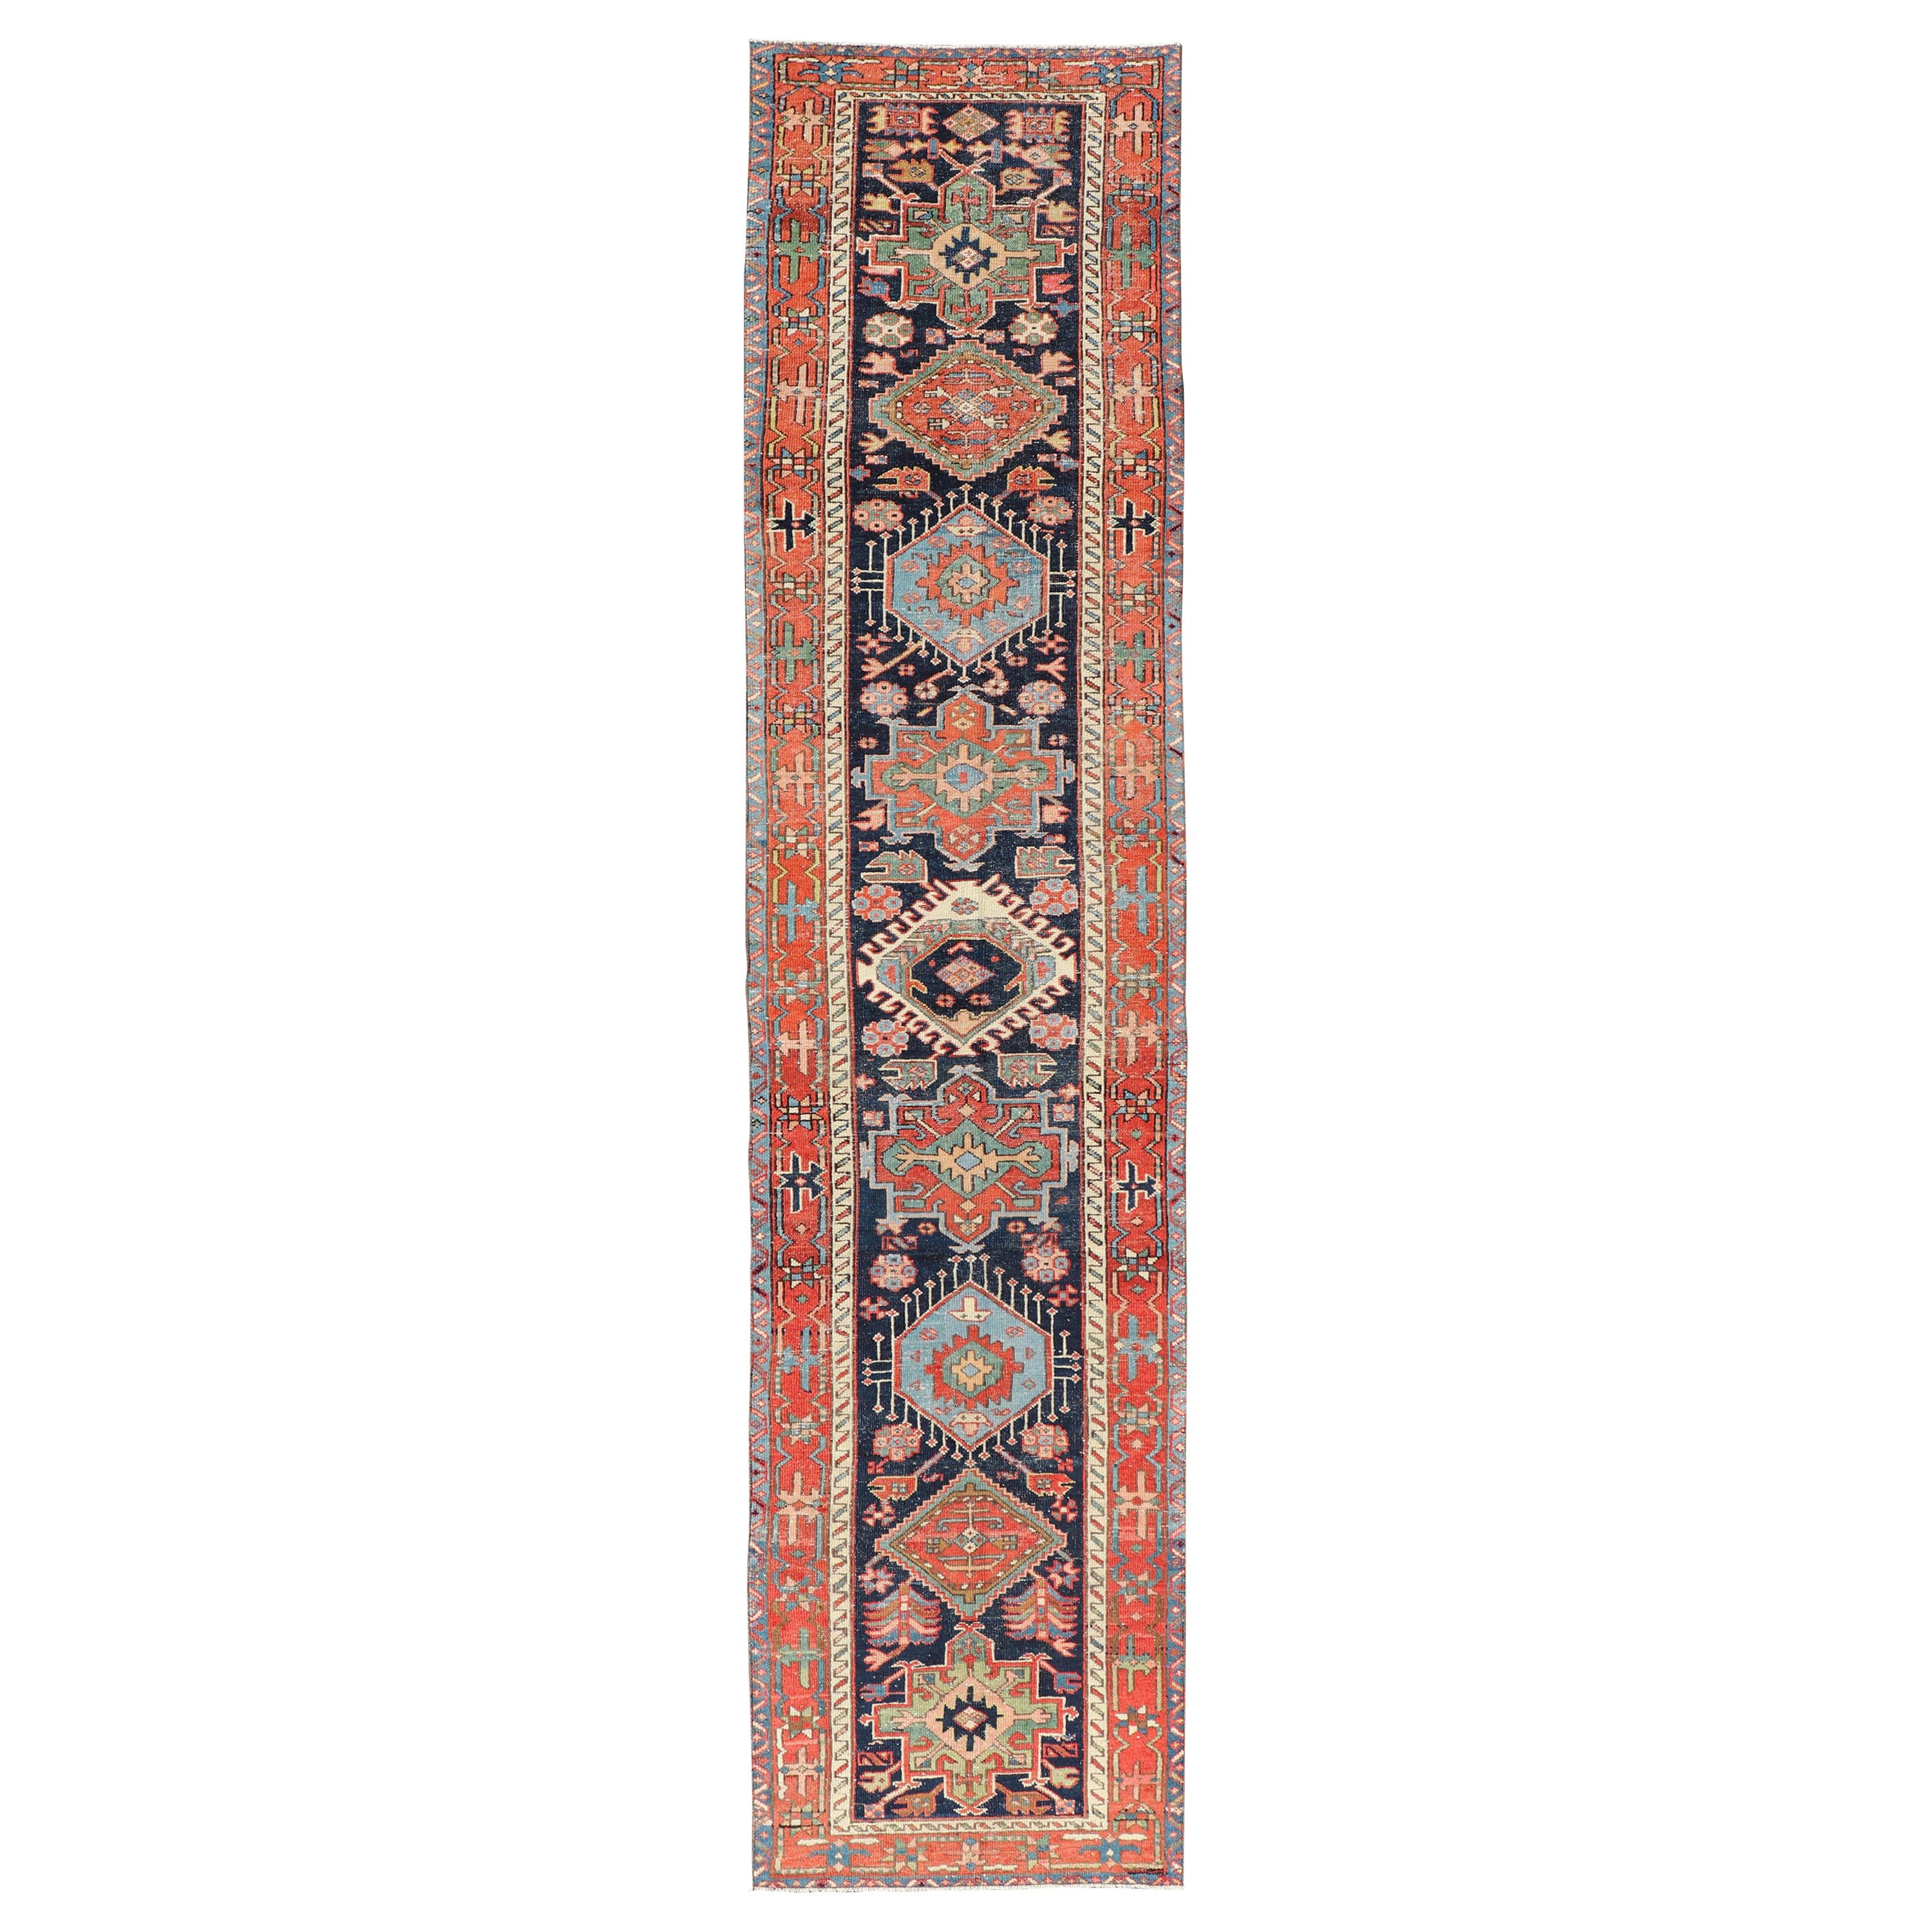 Antiker Heriz Serapi-Läufer aus Serapi mit farbenfrohem, hoch stilisiertem Medaillon-Design